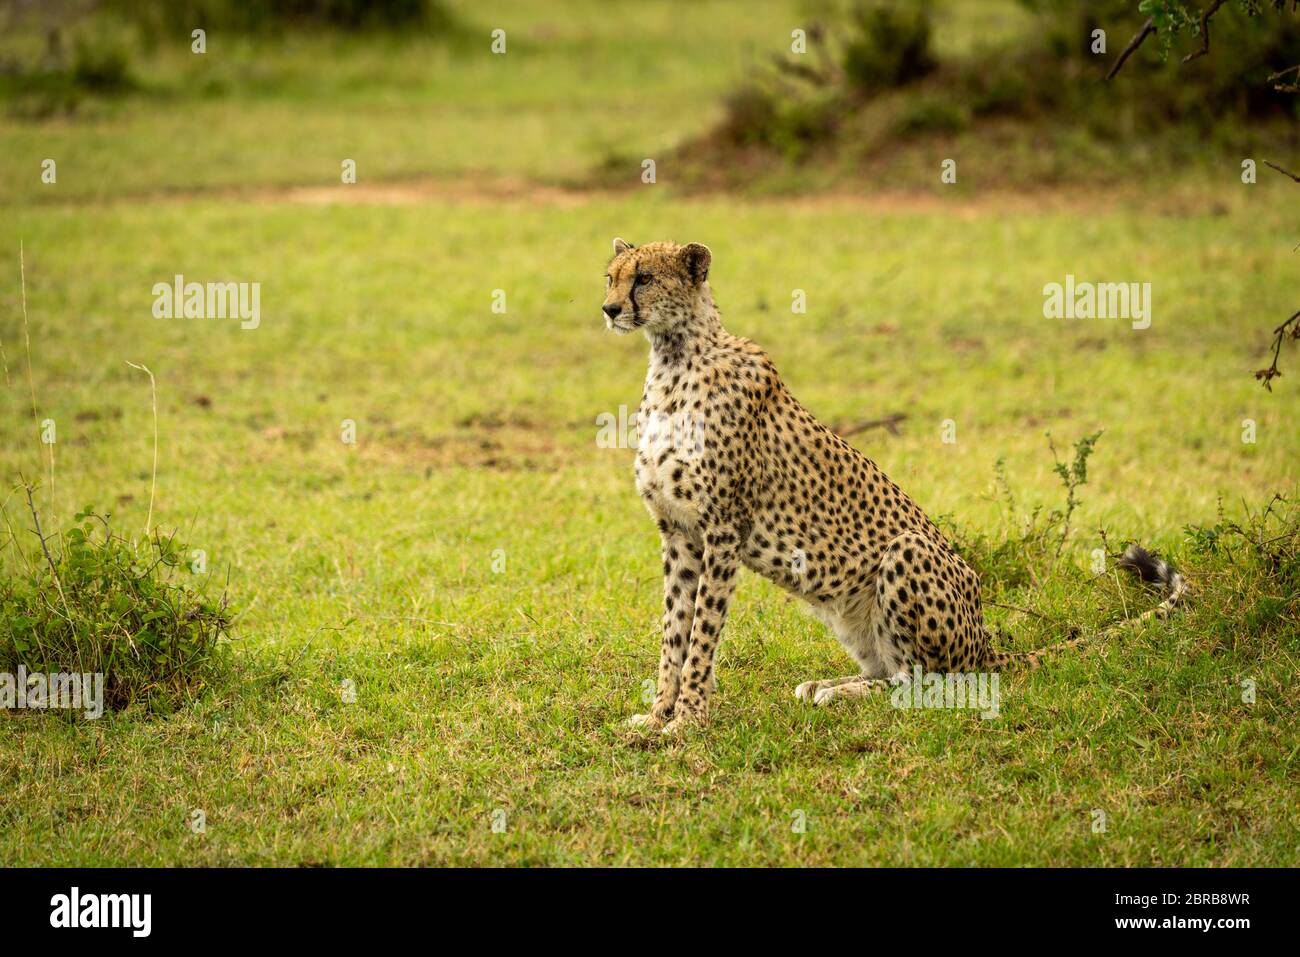 Cheetah sits on grassy bank near bushes Stock Photo